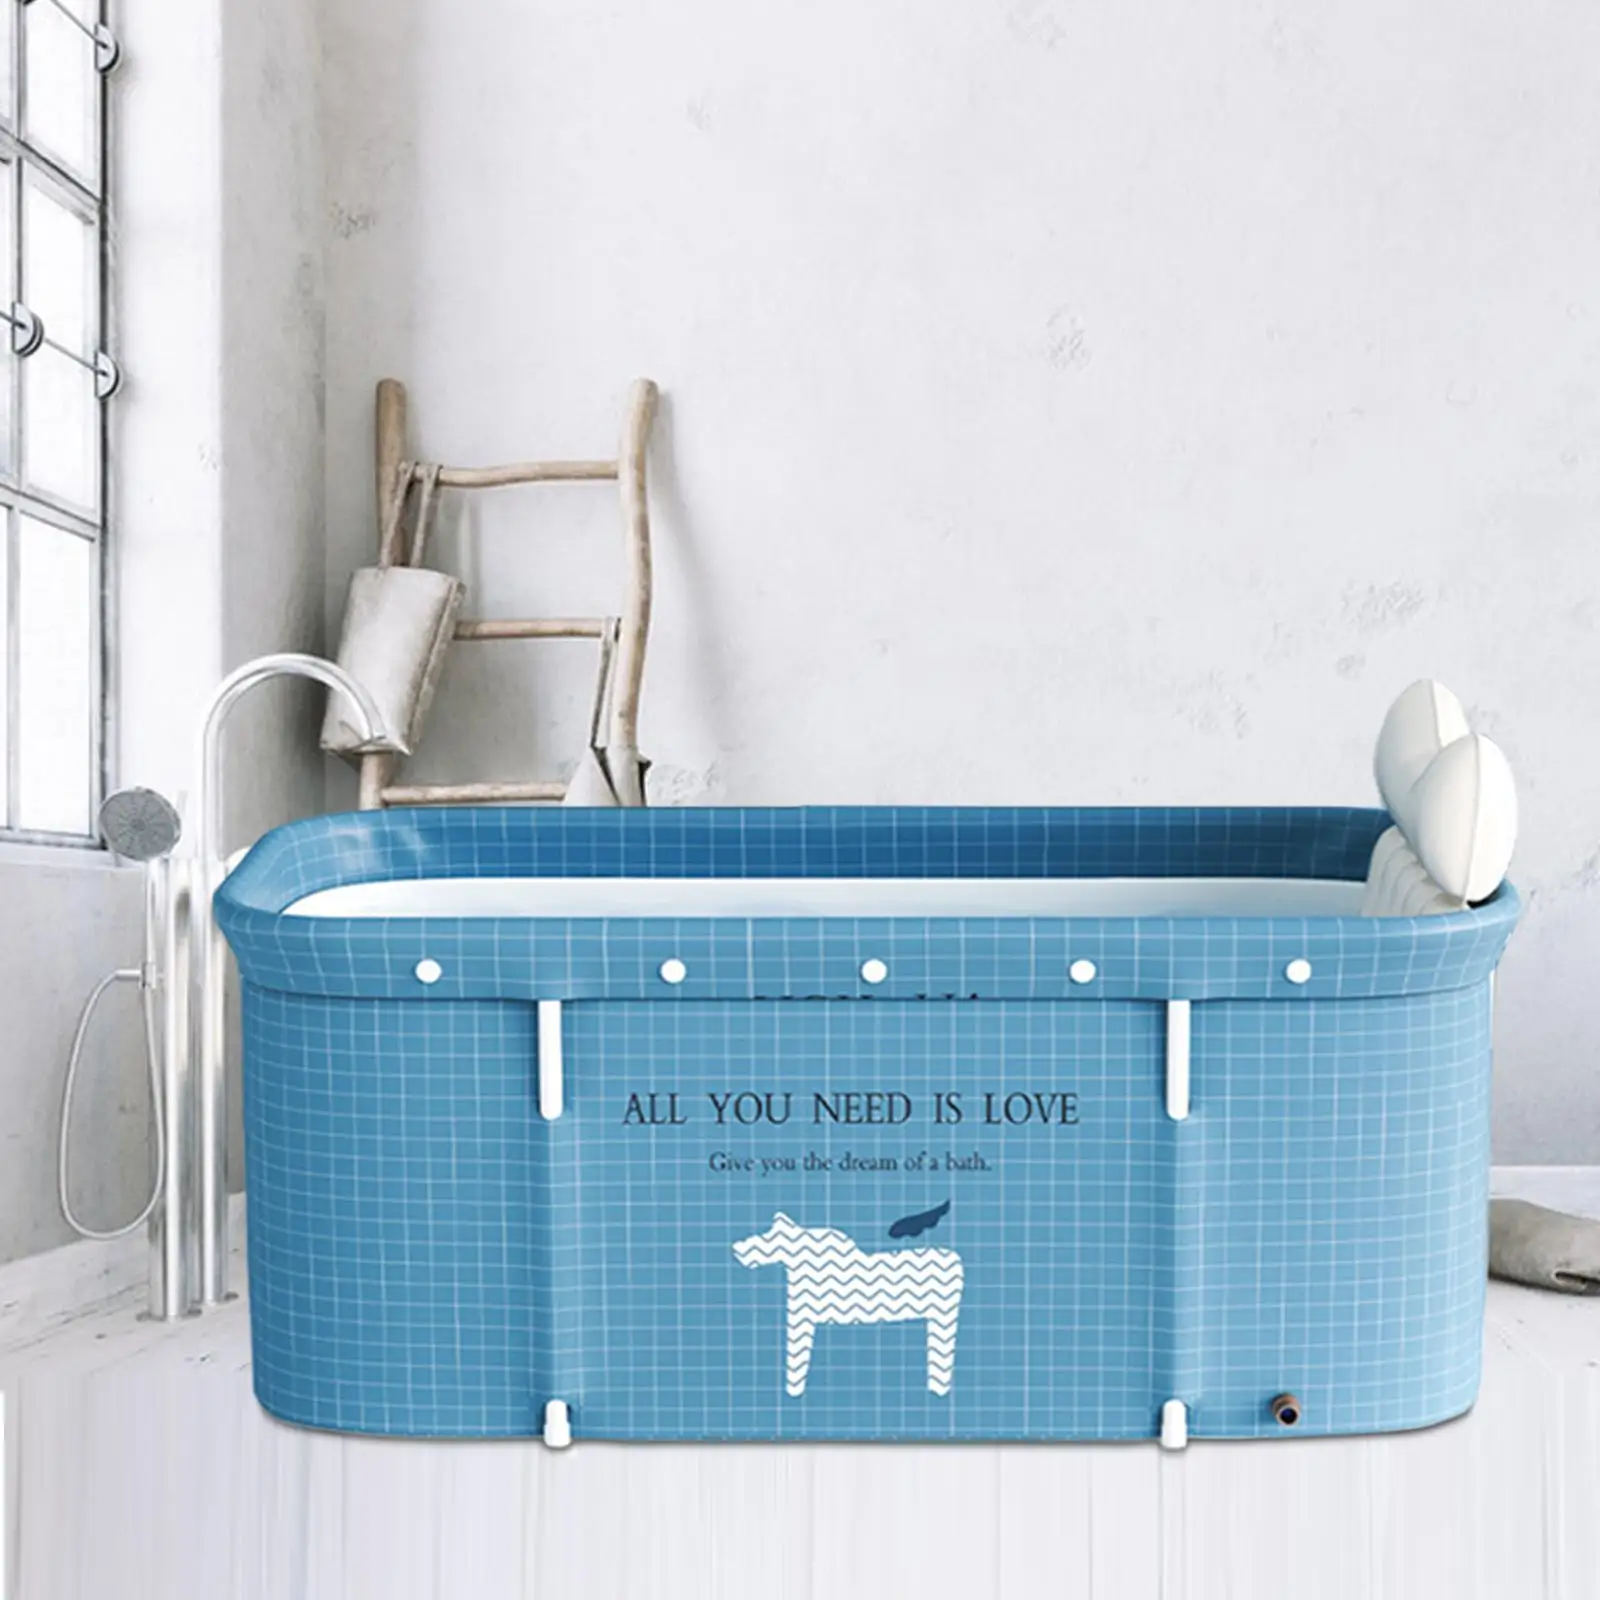 Bathroom Tub Comfort Cushion Maintenance Temperature Foldable Bathtub Hot Tub for Spa Bath Shower Stall Small Outdoor Indoor